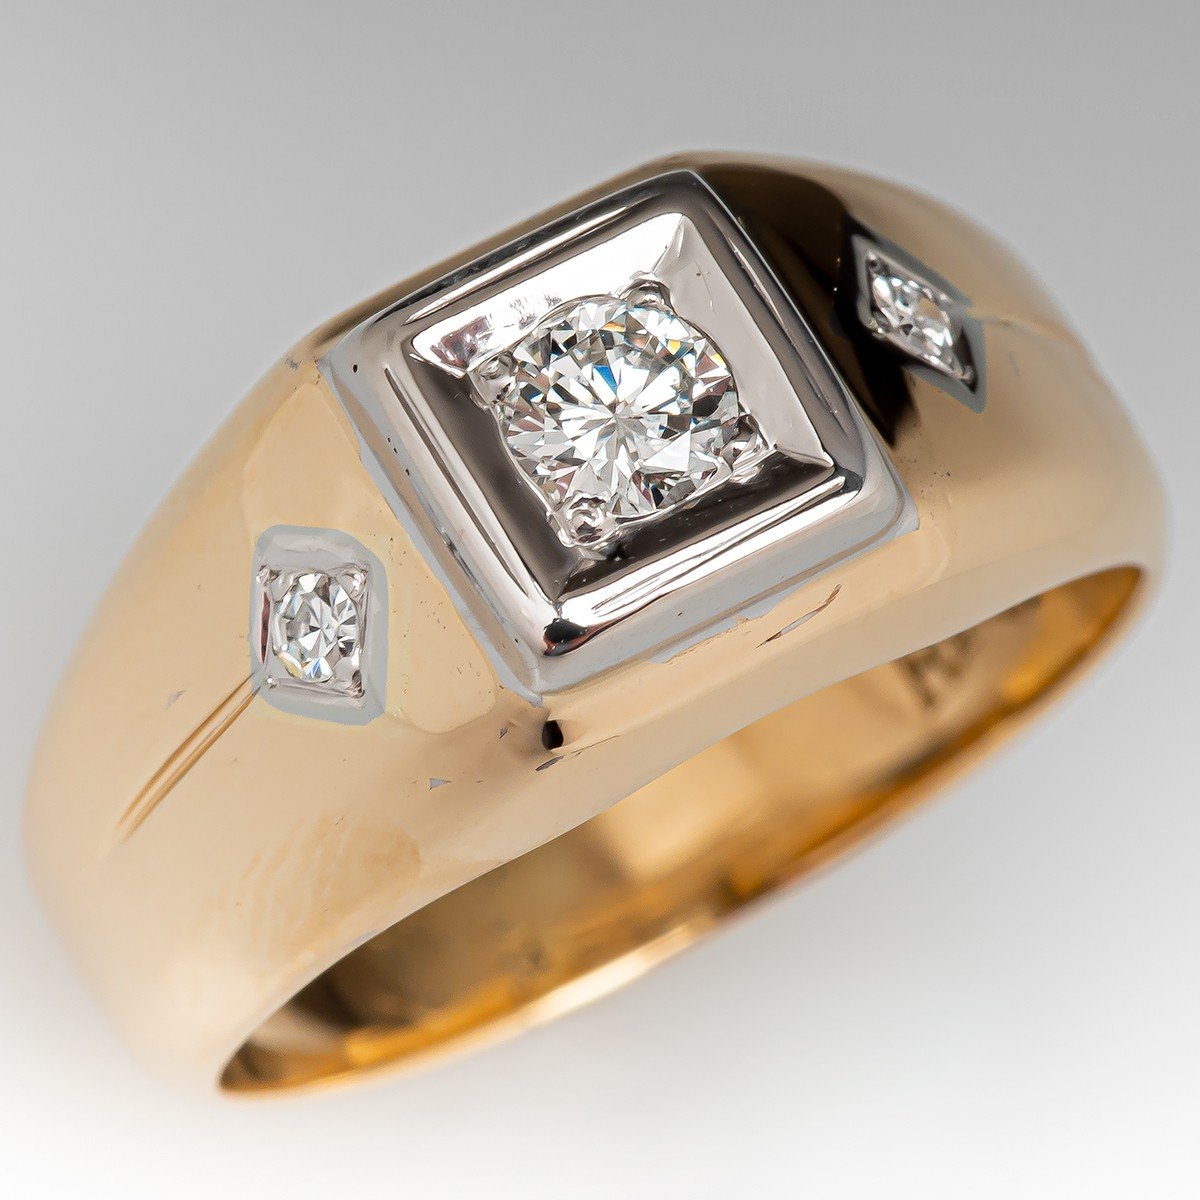 Men's Diamond Wedding Band Solid 10k Yellow Gold Flat Top Ring 1/4 Ctw.  (.28 Ctw.) - Size 8 | Amazon.com